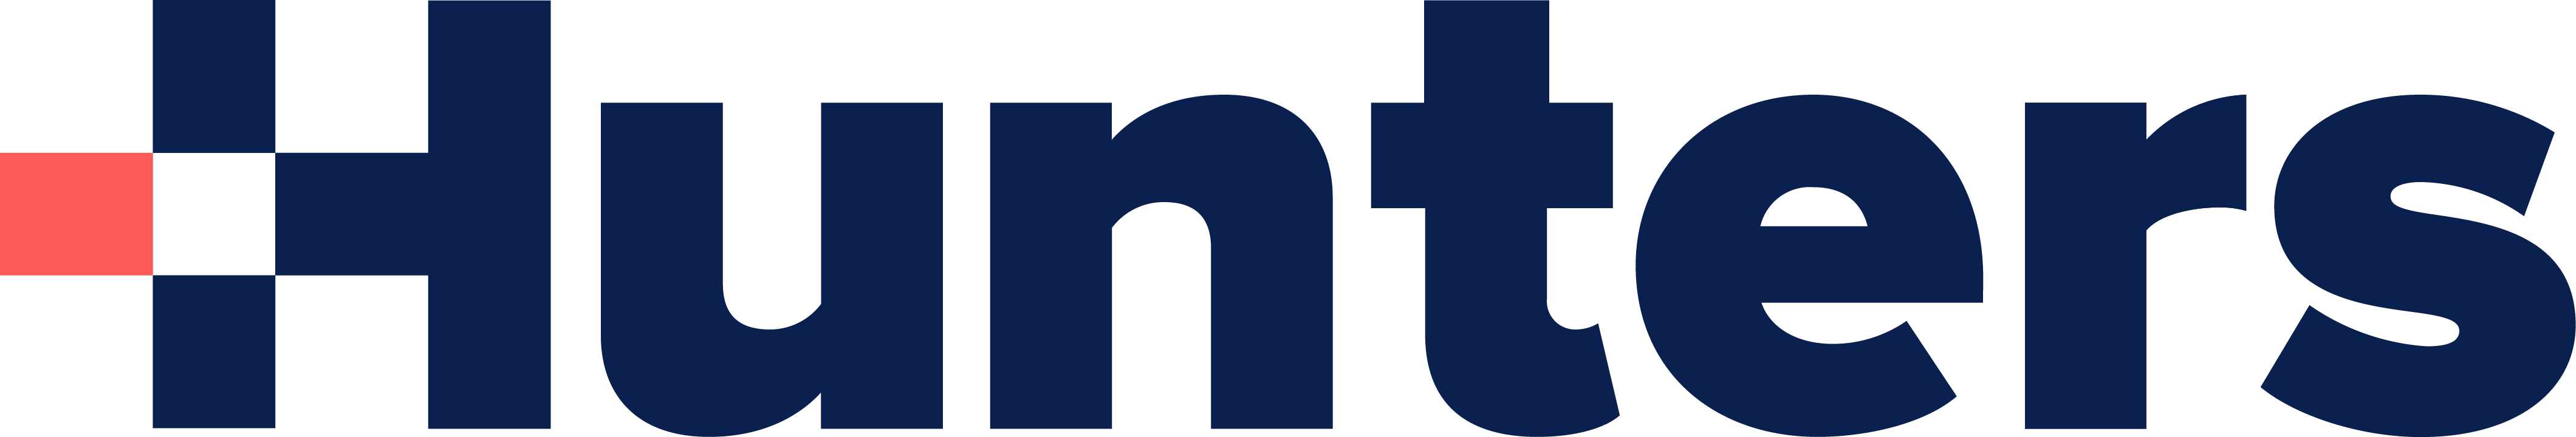 Hunters Logo Blue (2).png